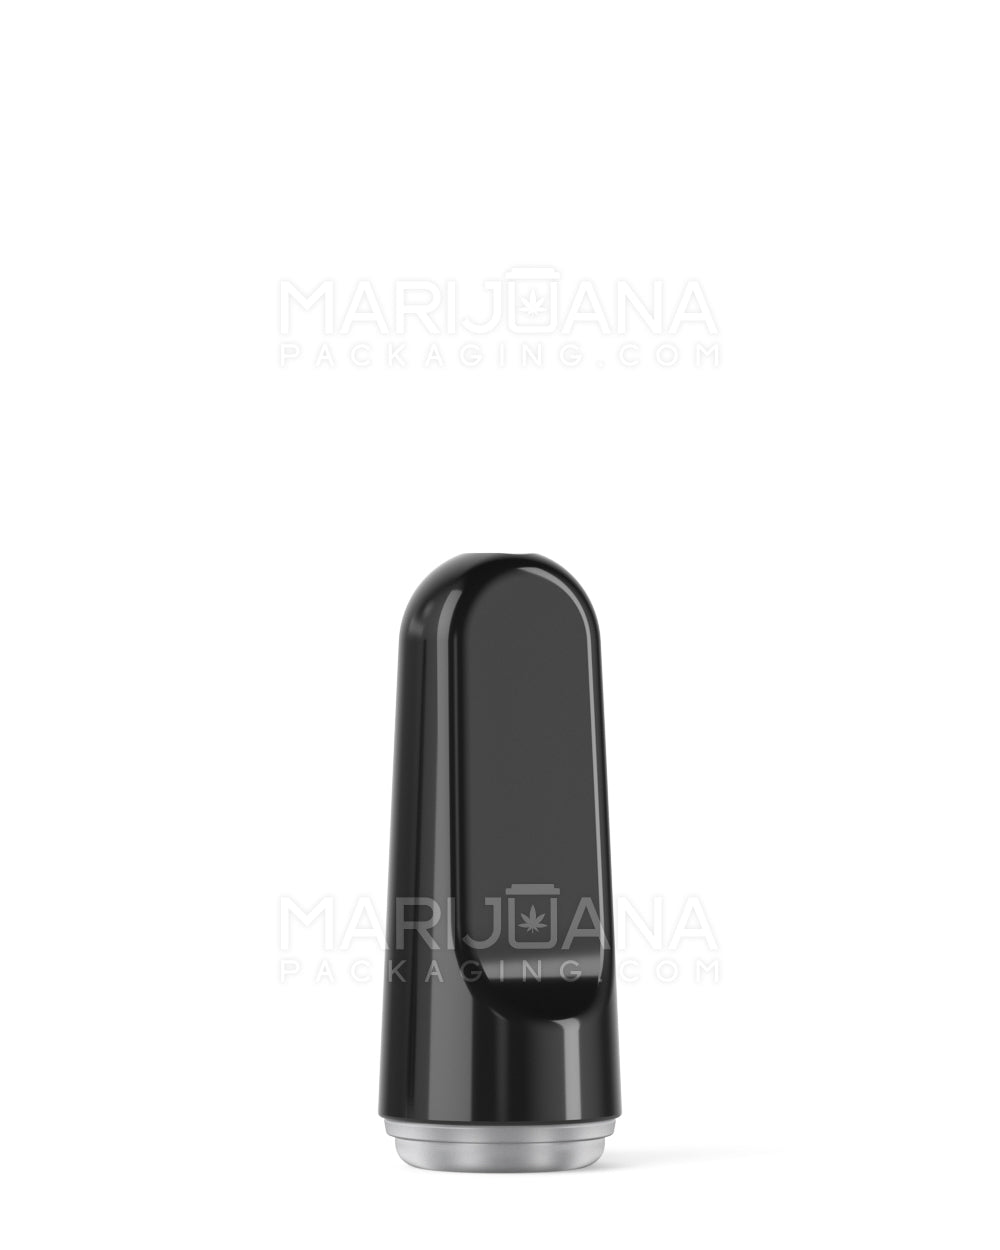 RAE | Flat Vape Mouthpiece for Screw On Ceramic Cartridges | Black Ceramic - Screw On - 400 Count